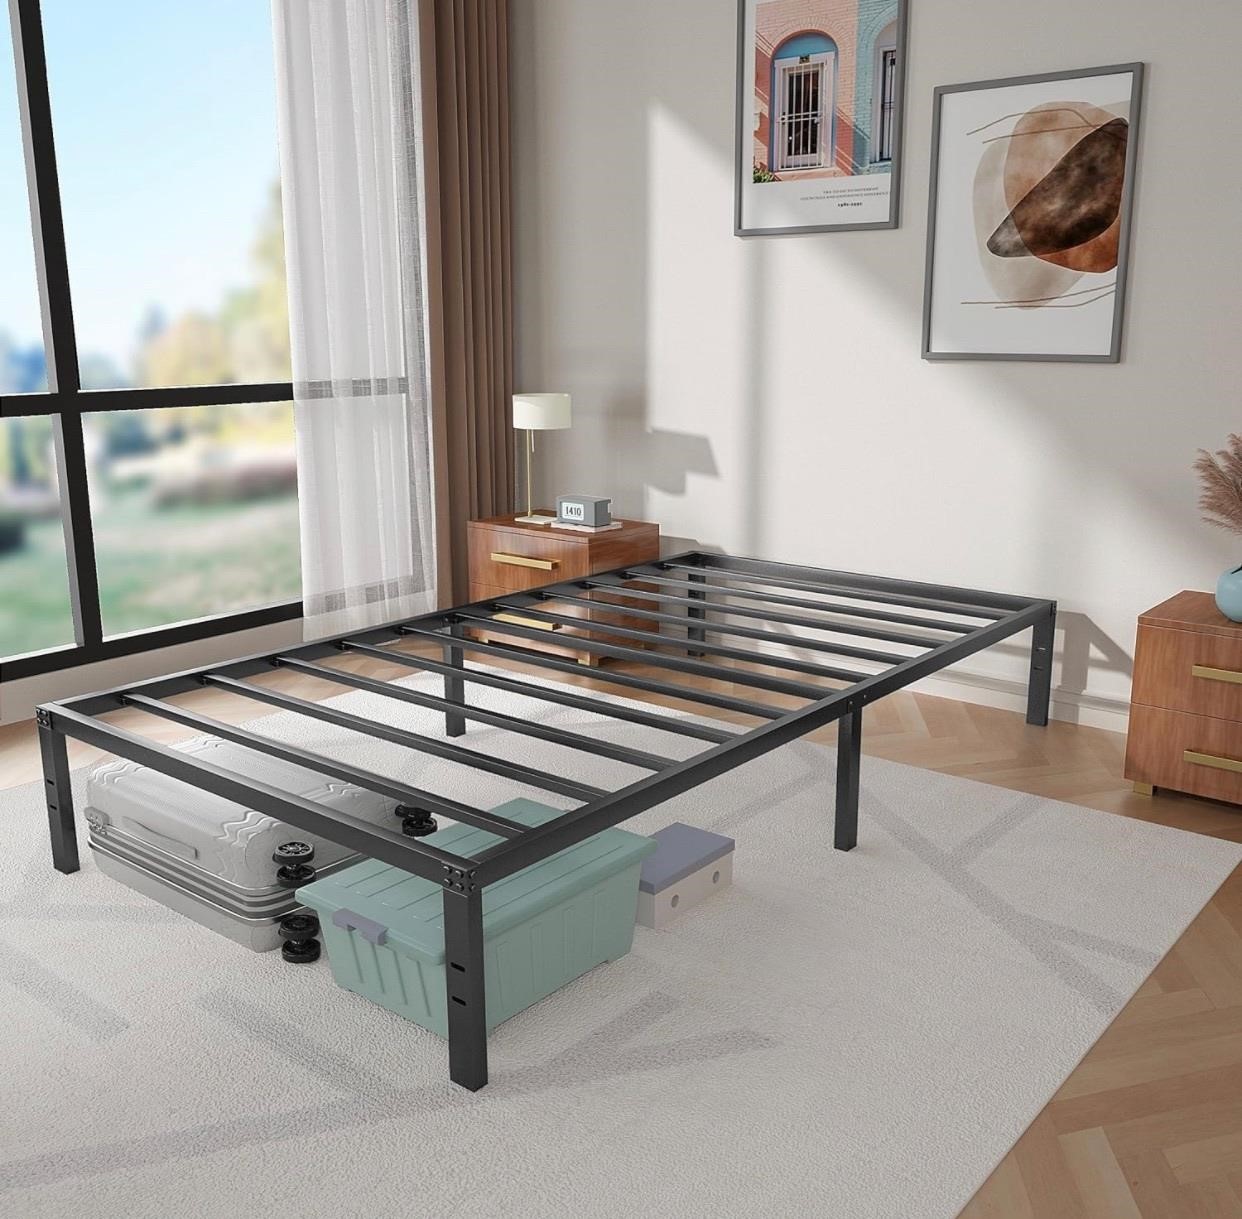 Twin XL Metal Platform Bed Frame